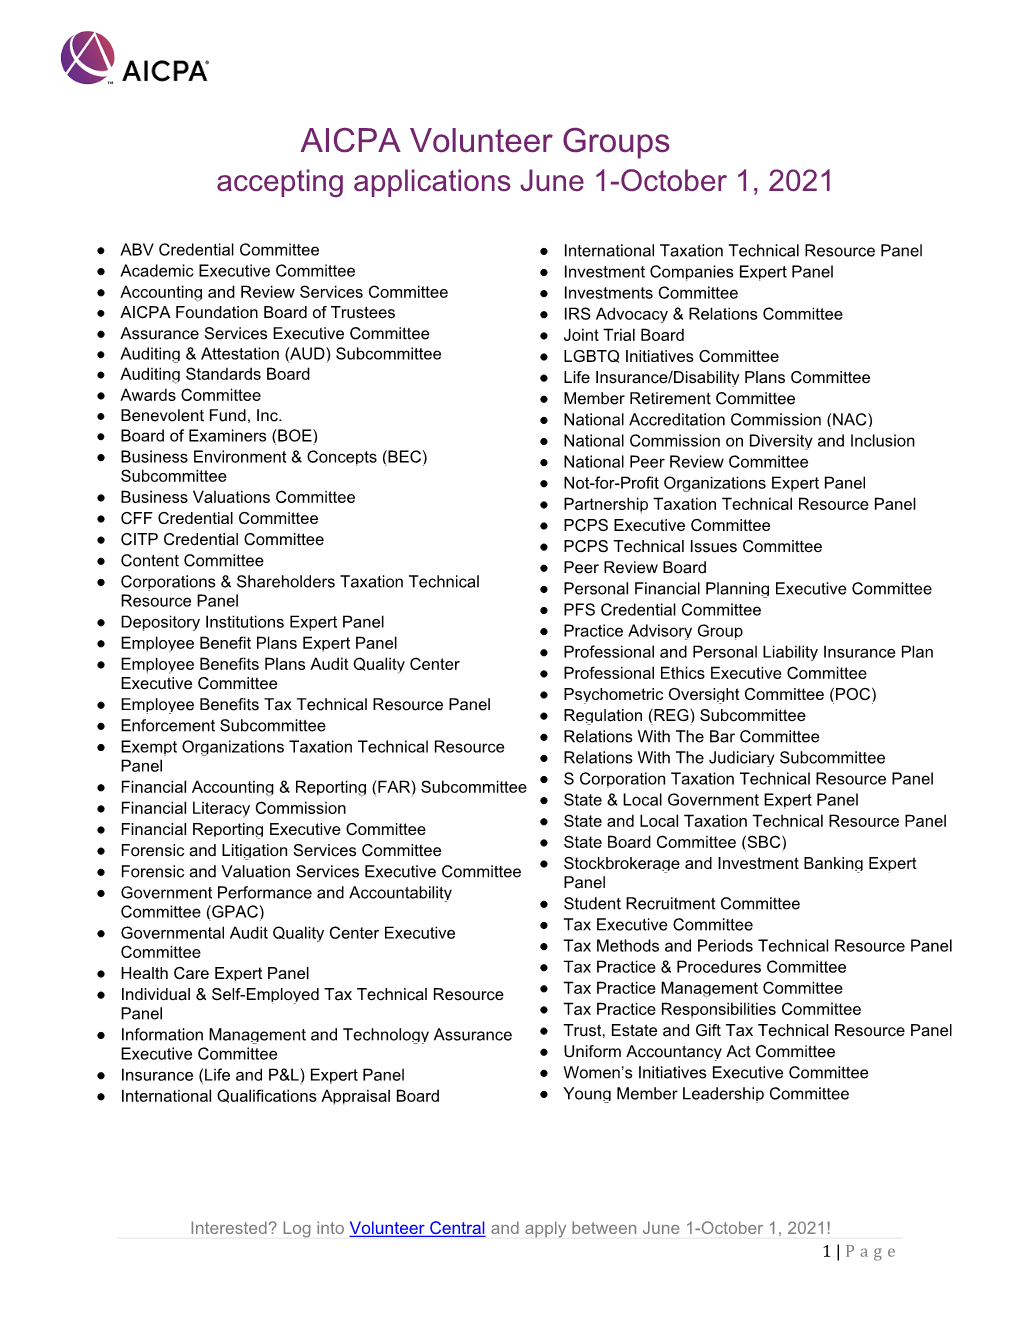 AICPA Volunteer Groups Accepting Applications June 1-October 1, 2021